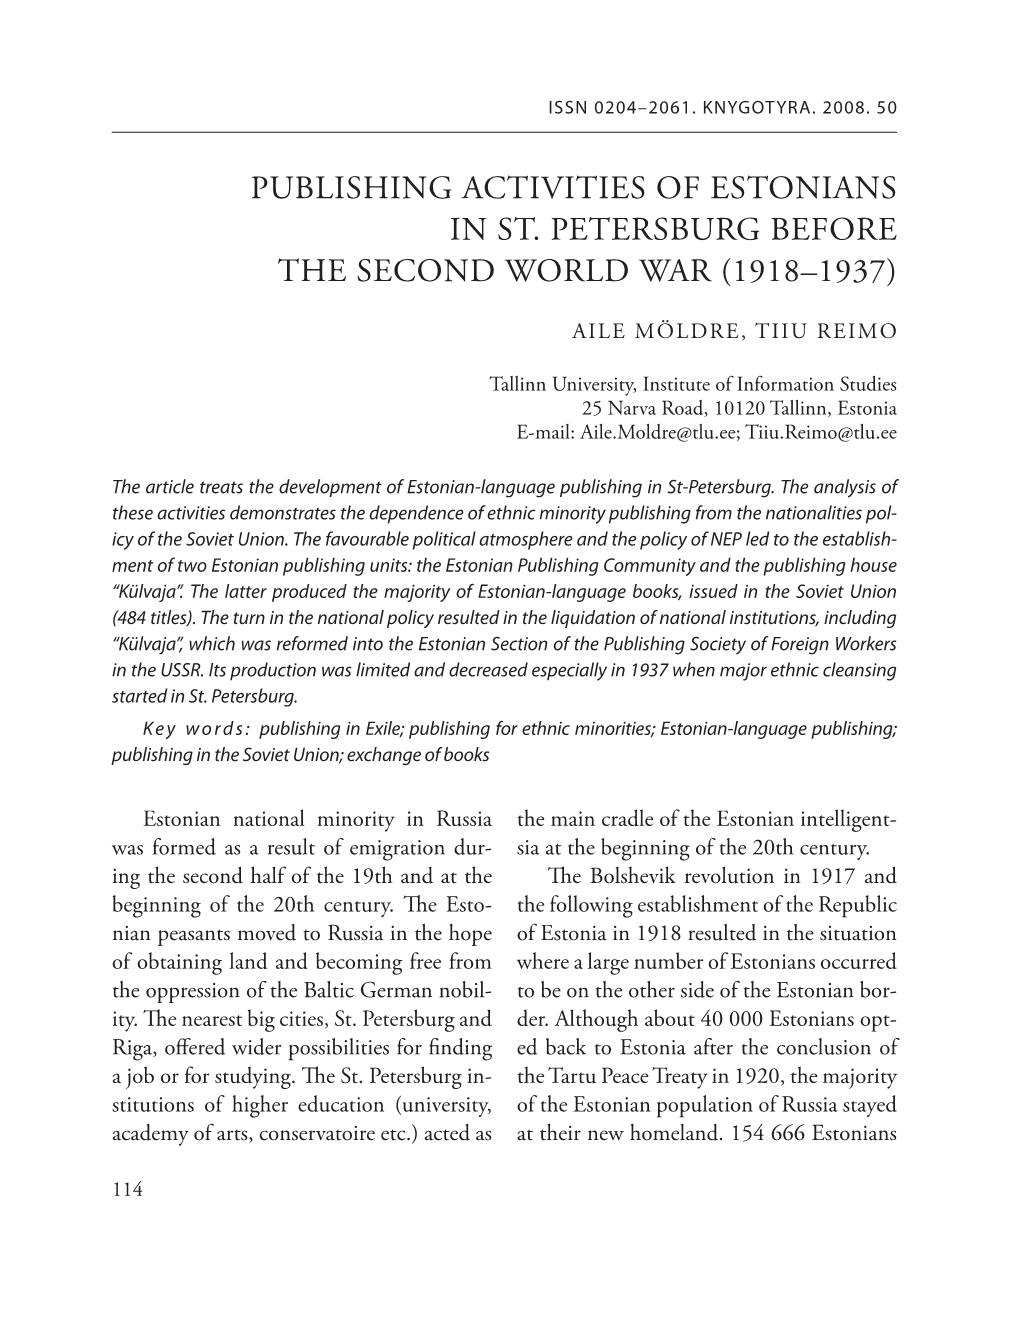 Publishing Activities of Estonians in St